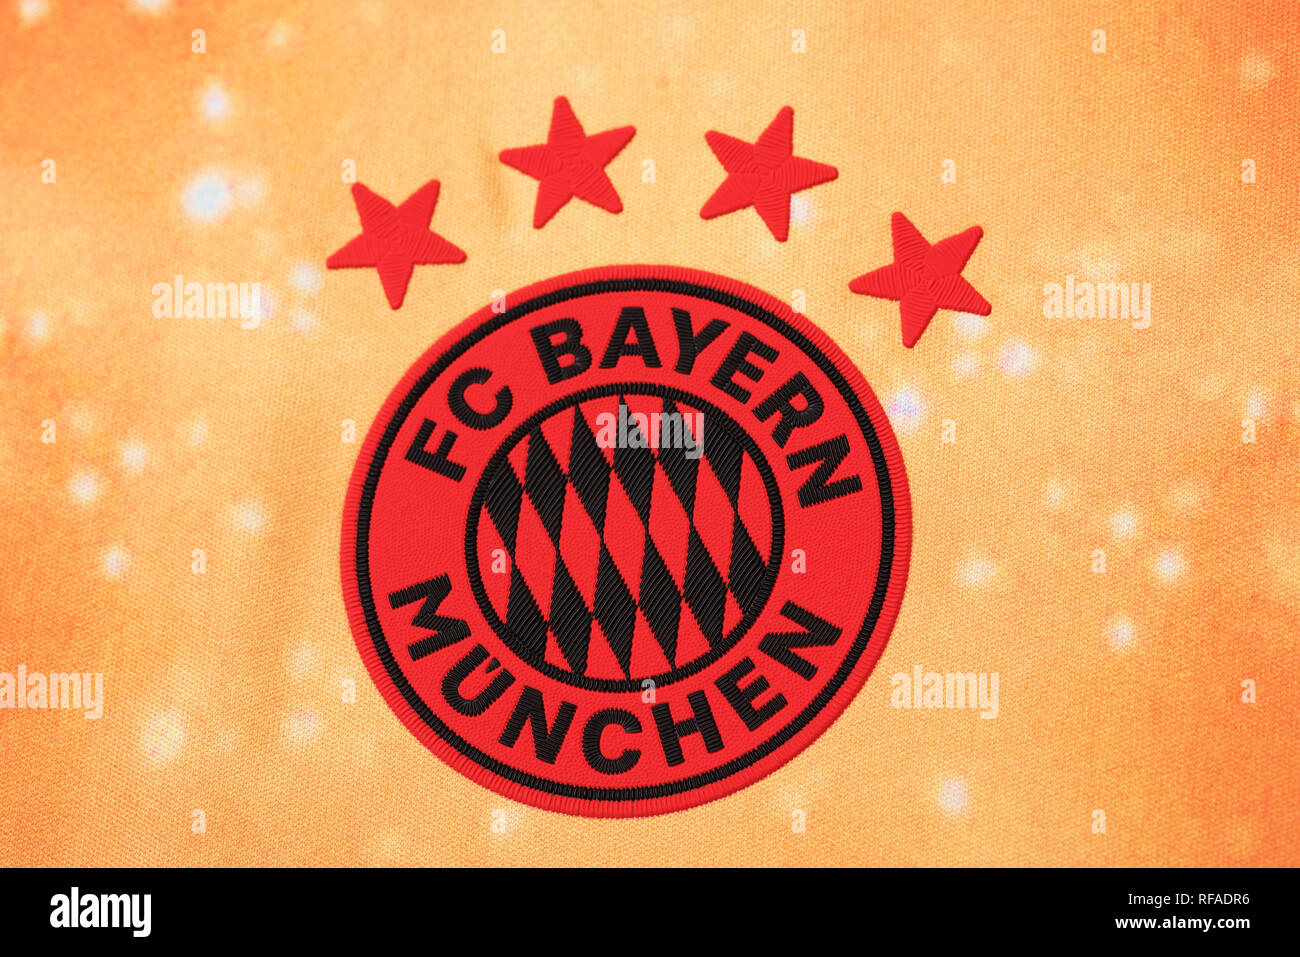 FC Bayern Munchen limited edition EA Sports Jersey Stock Photo - Alamy